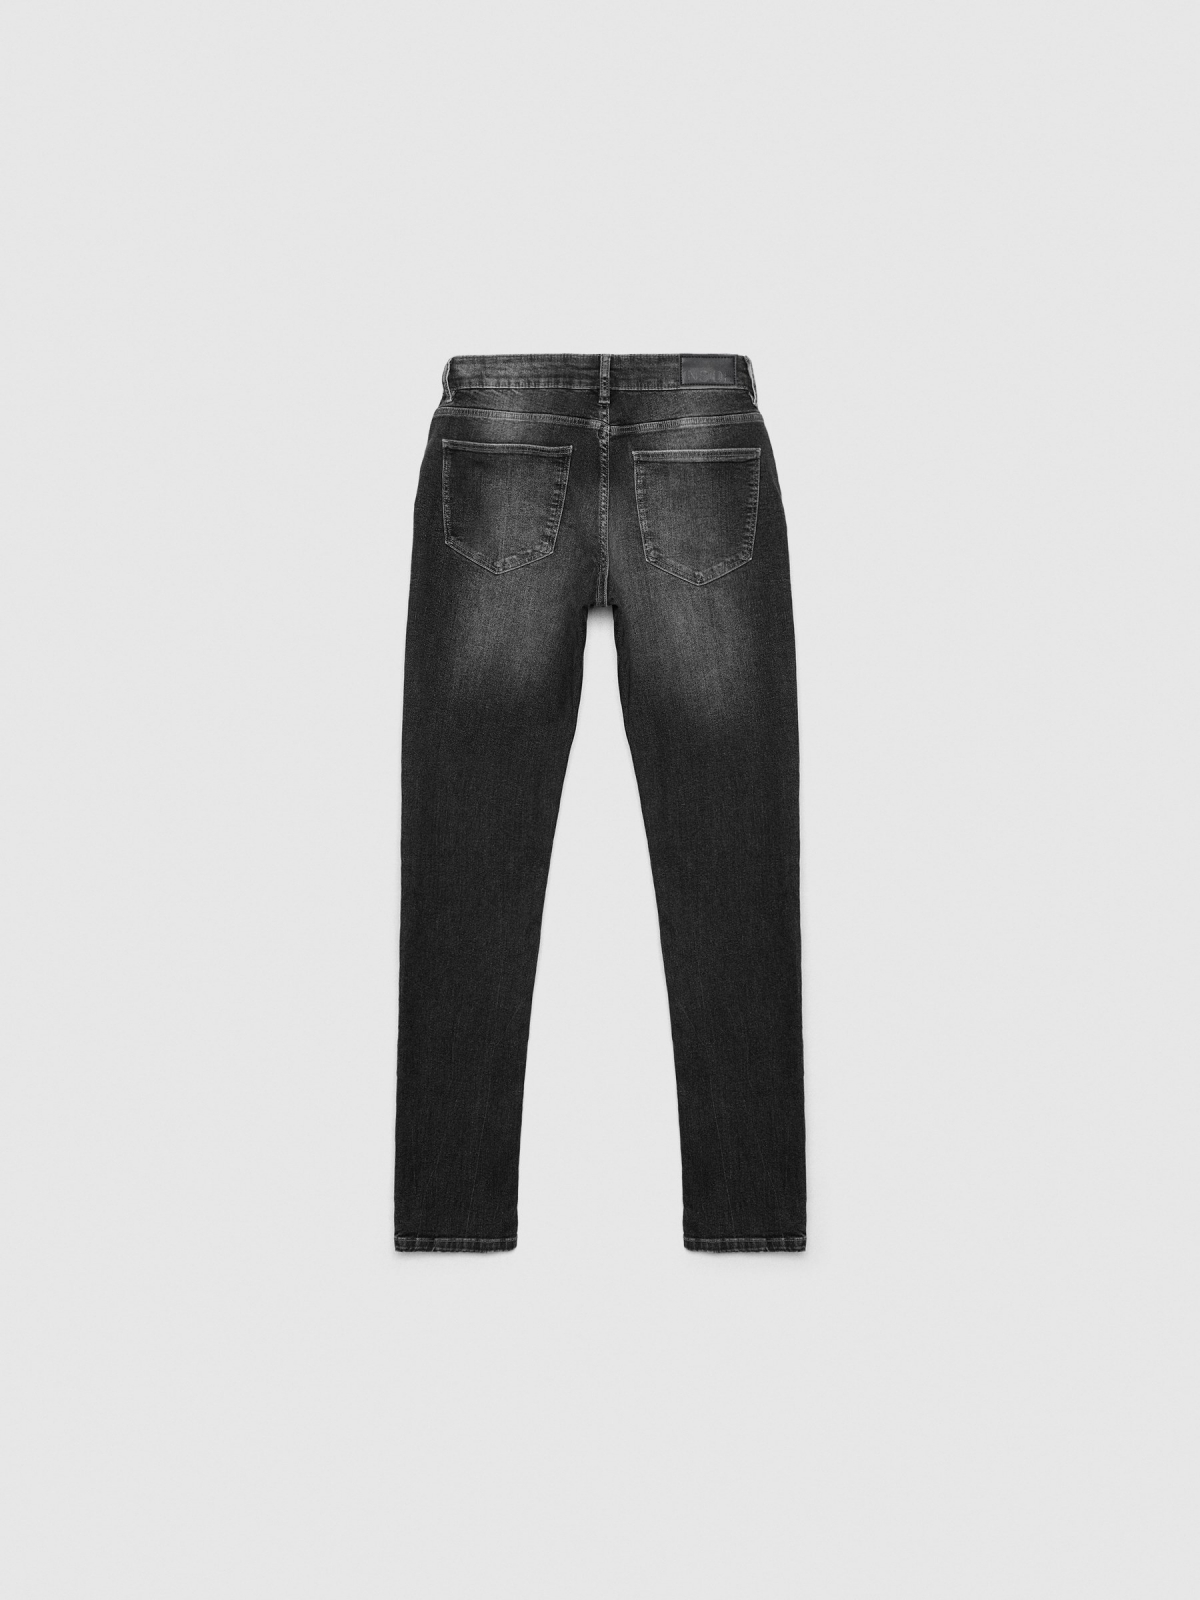 Grey denim slim jeans black detail view